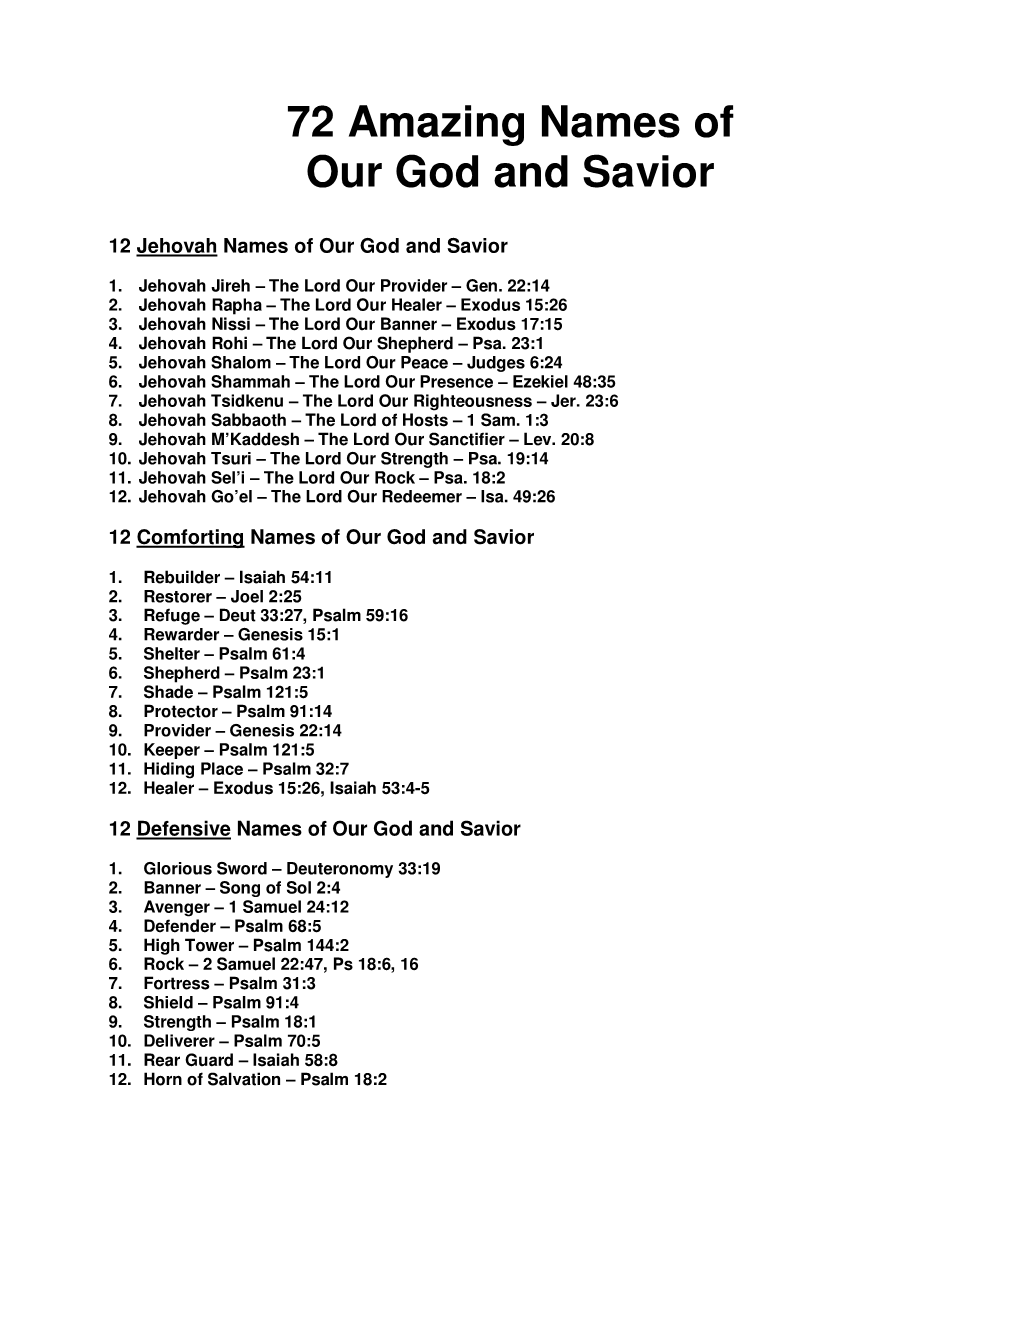 72 Amazing Names of Our God and Savior